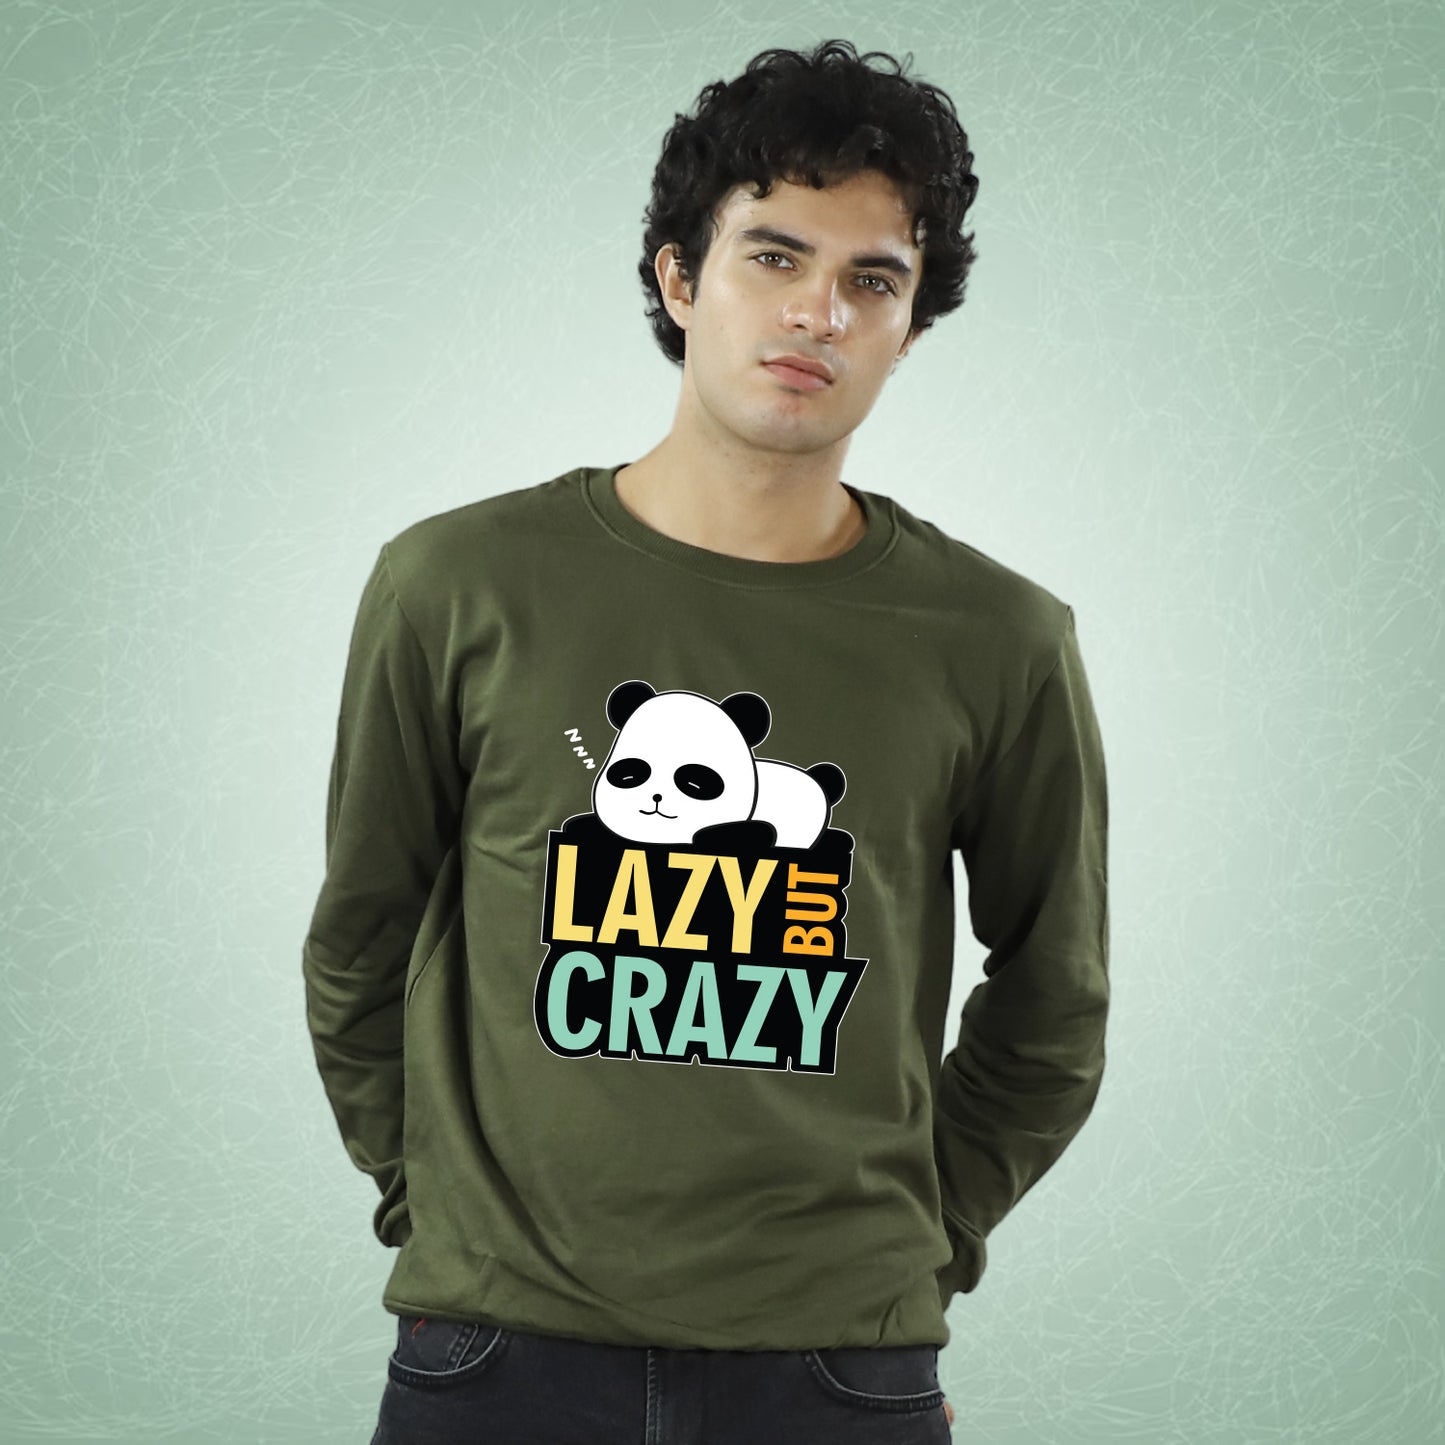 Lazy But Crazy - Sweatshirt